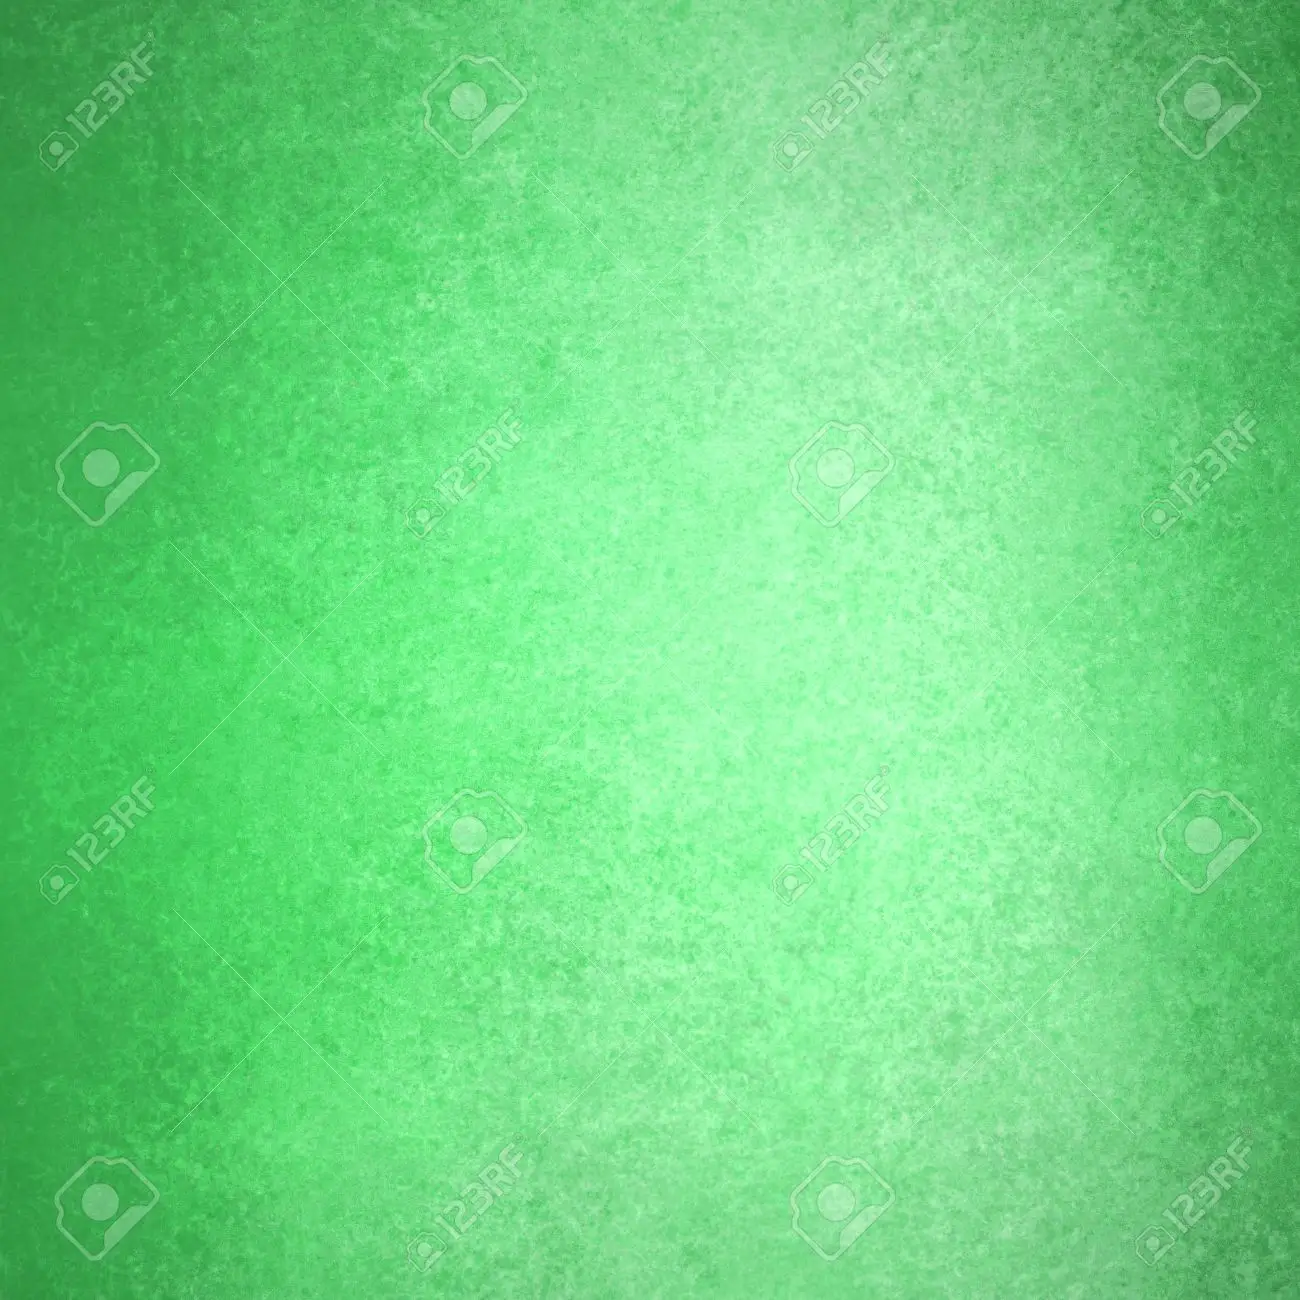 1920x1080 Bottle Green Solid Color Background